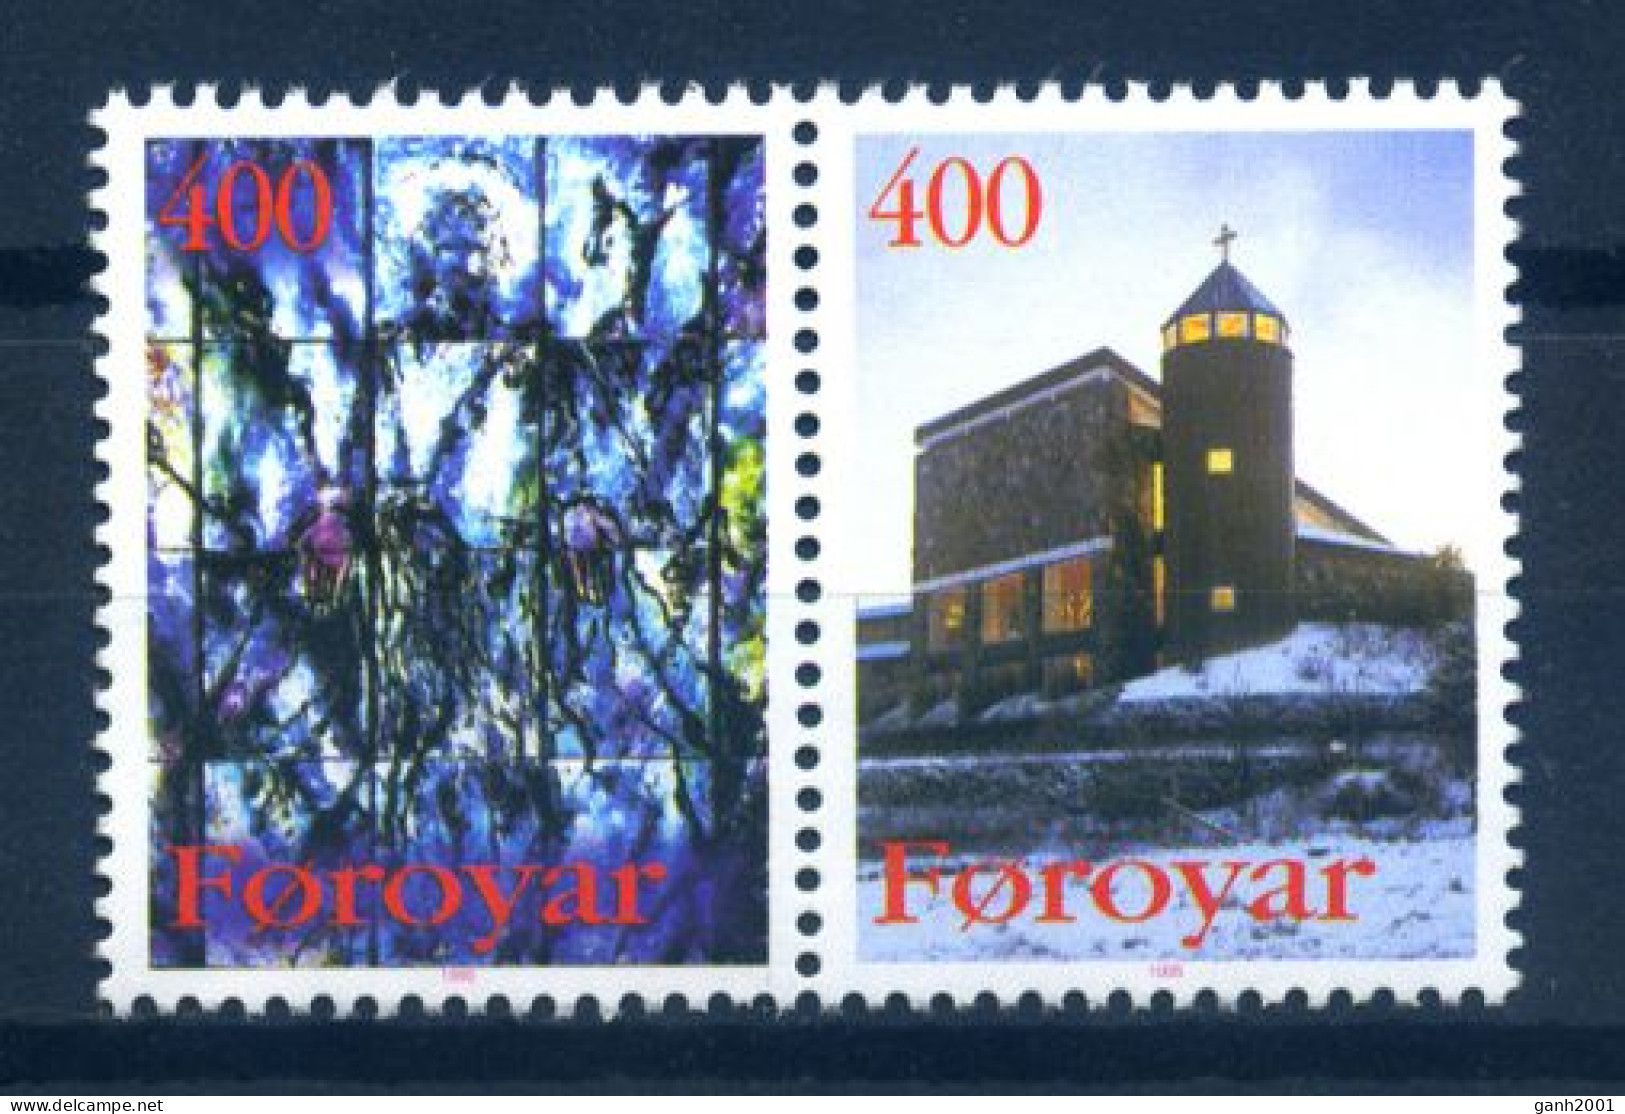 Faroe Is. 1995 Feroe / Catholic Church Christmas MNH Navidad Iglesia Católica Katholische Kirche / It03   1-48 - Churches & Cathedrals